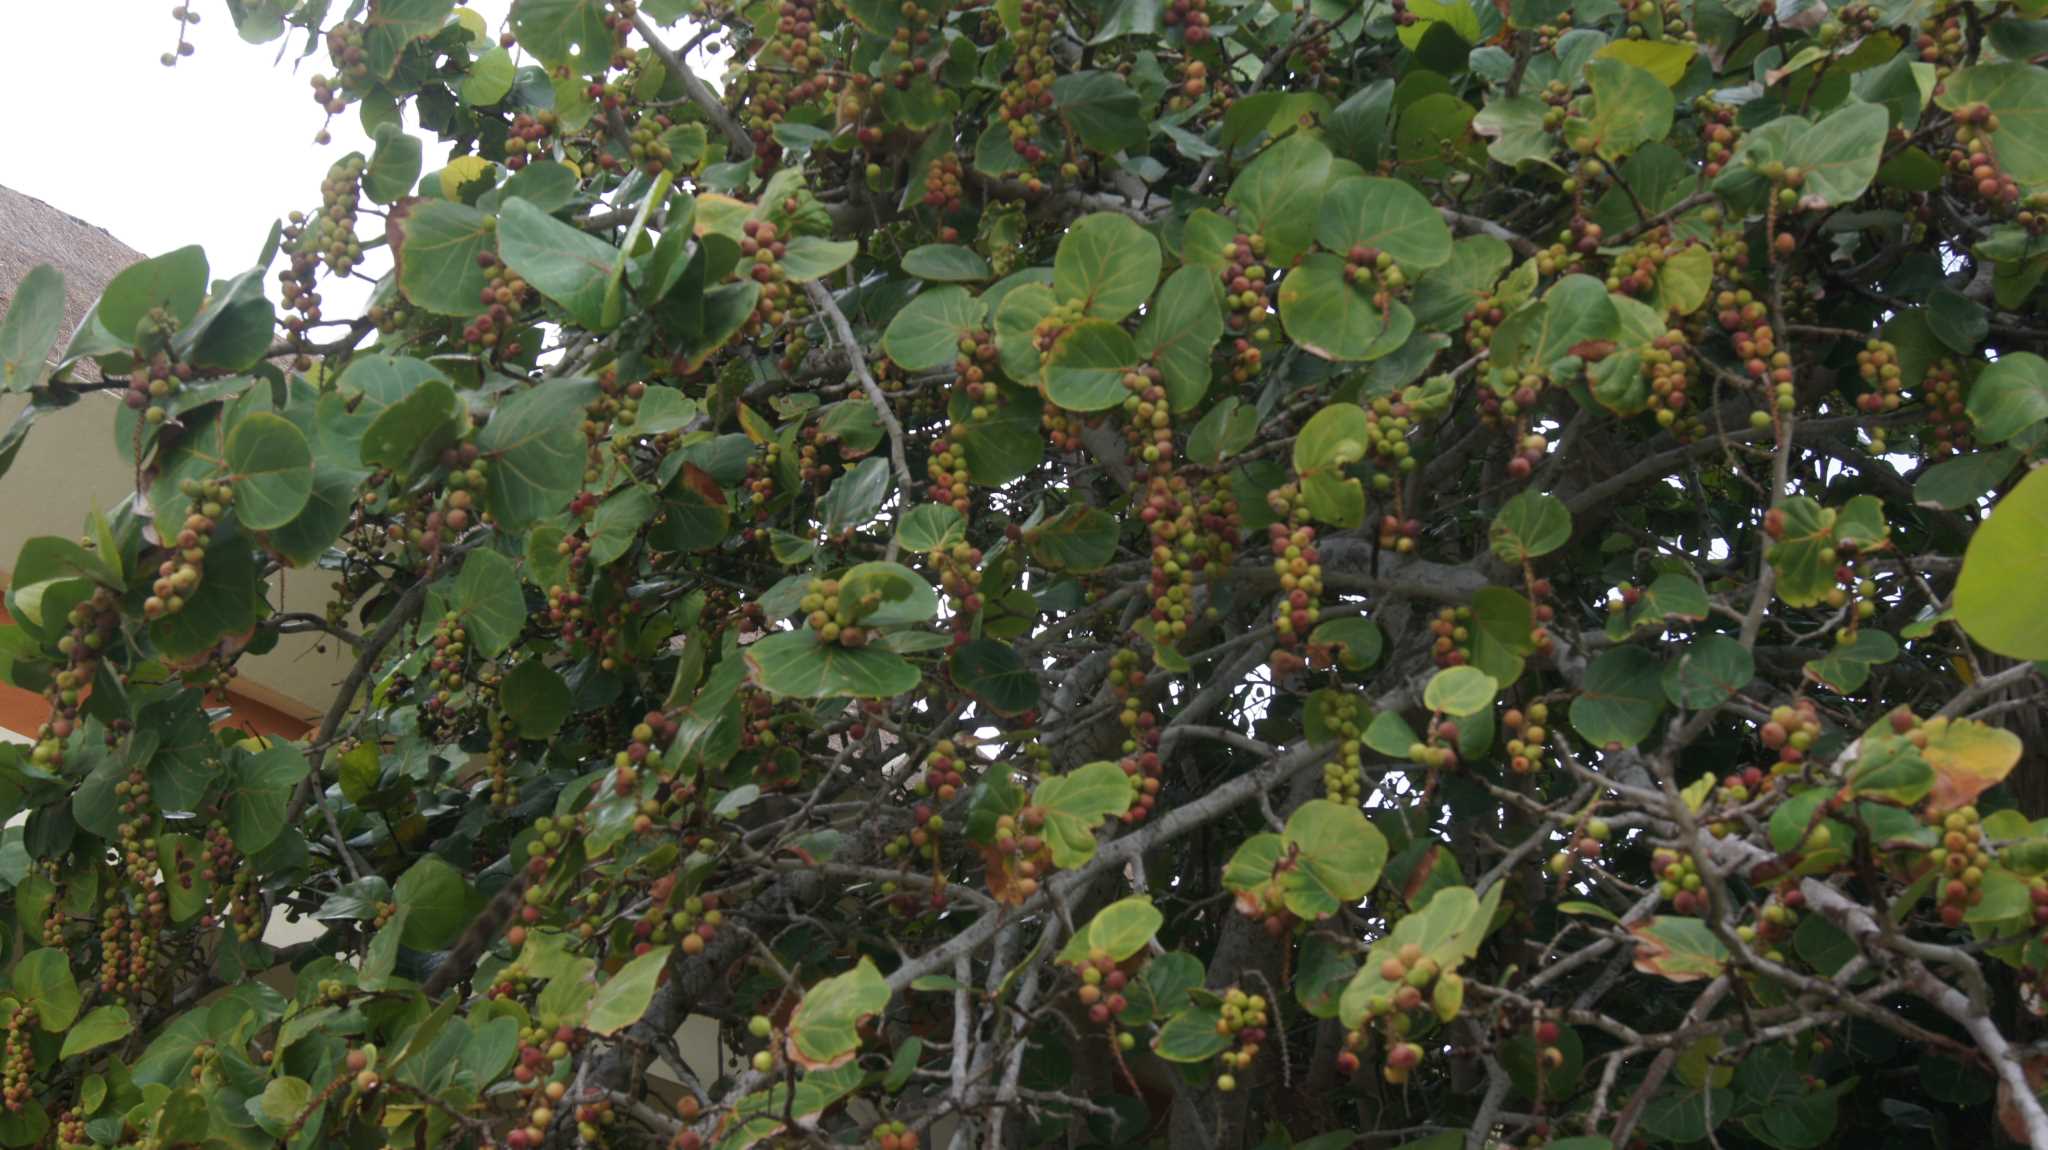 Коати обожают дикий виноград в Мекскике - Bahia principe - A Coati(like a blend of a badger & a lemur)-wilde grape